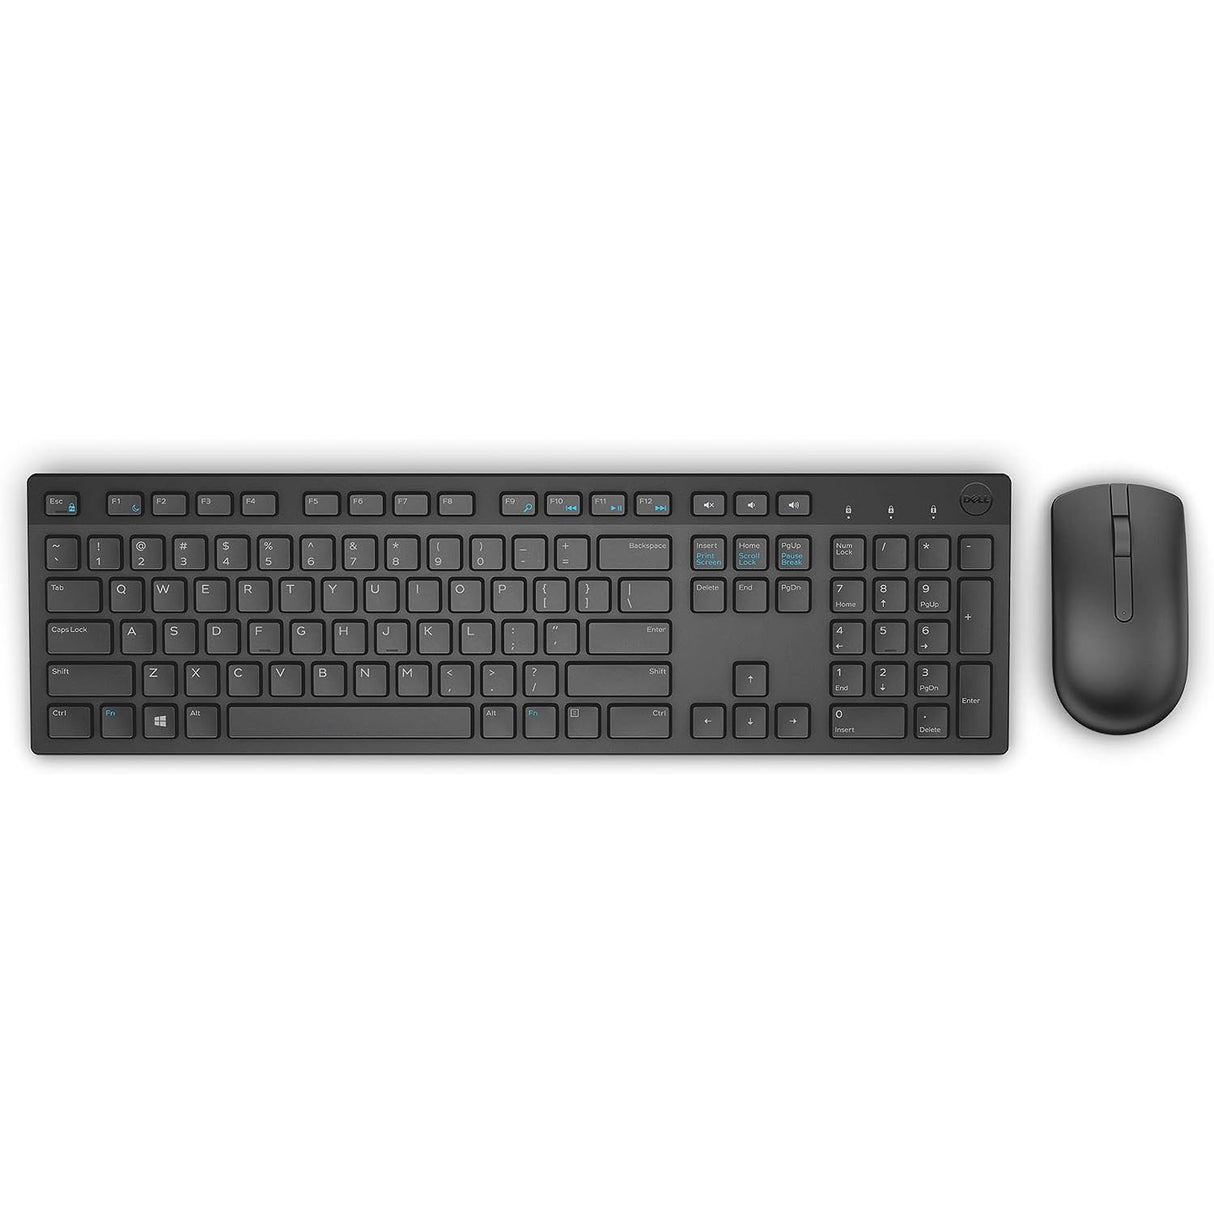 Dell KM636-BK-US - Wireless Keyboard & Mouse Combo - New